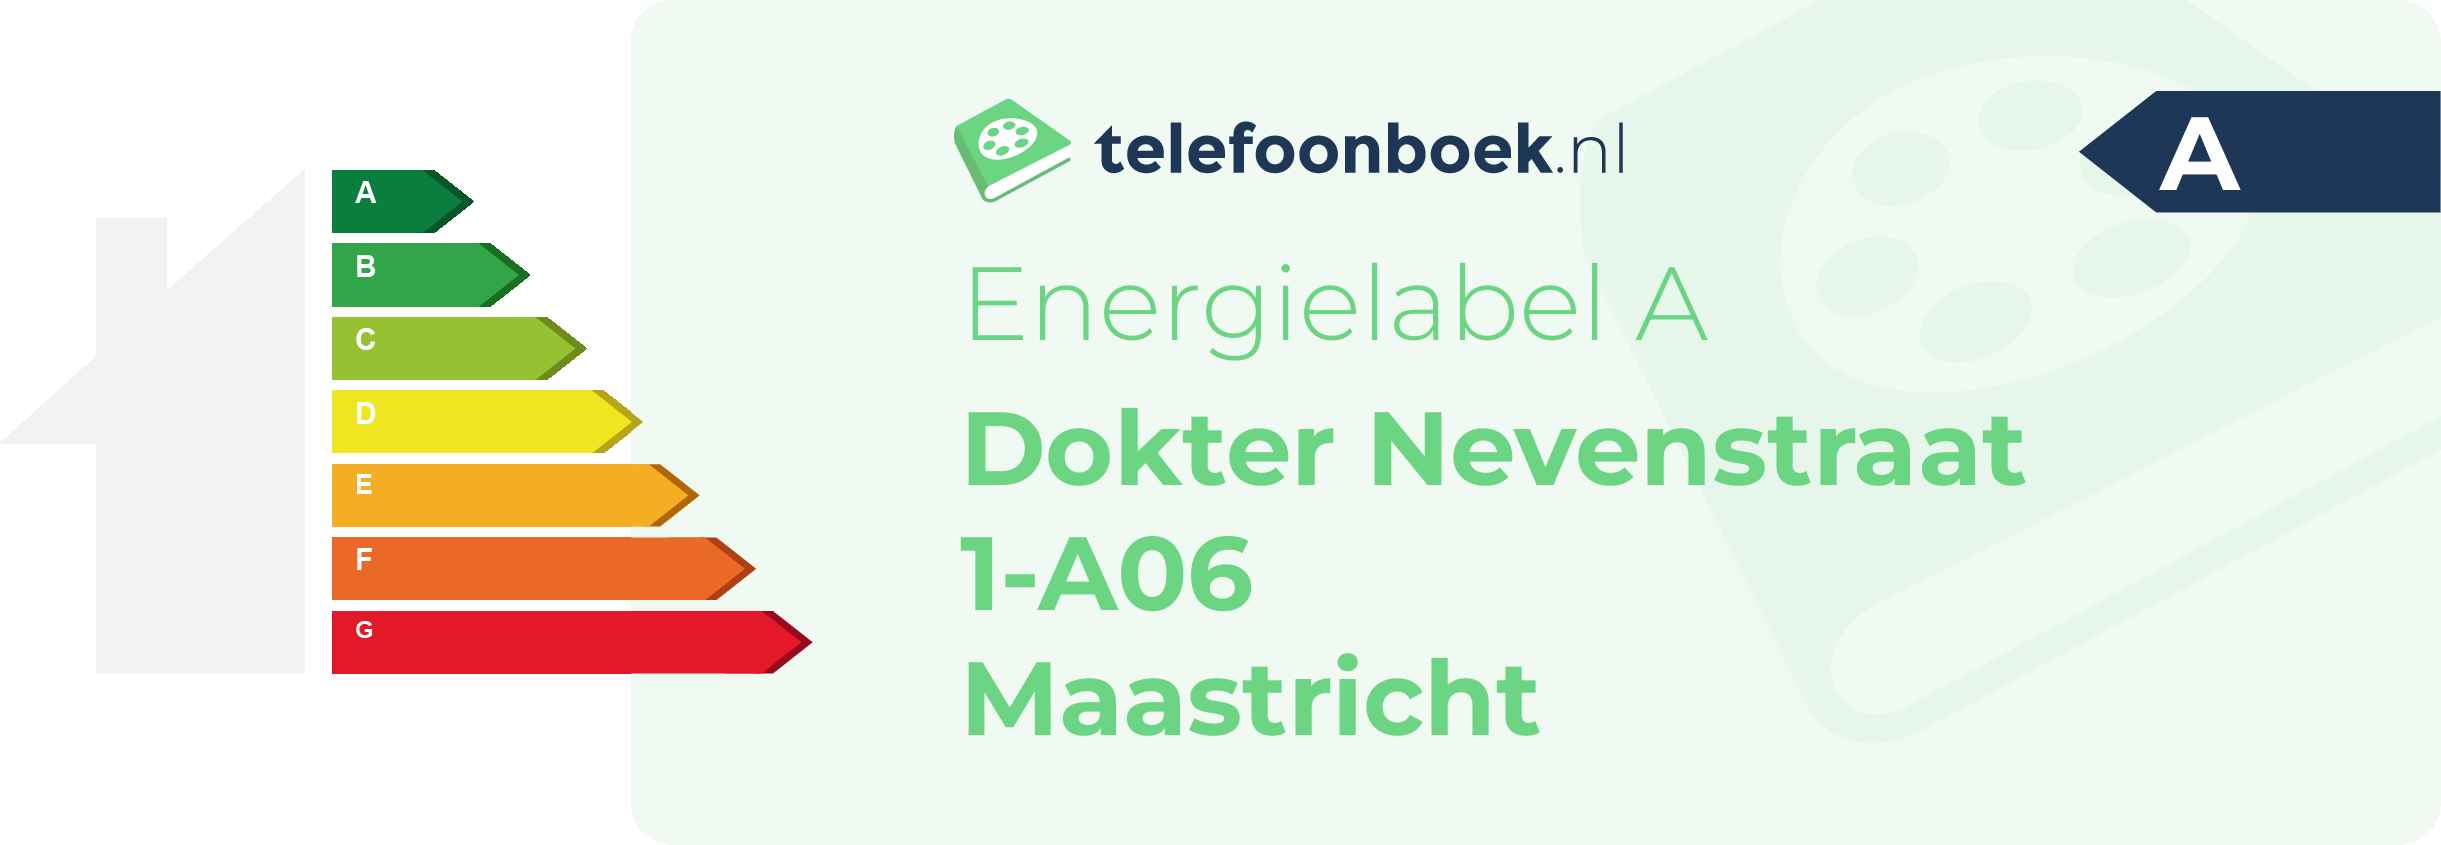 Energielabel Dokter Nevenstraat 1-A06 Maastricht